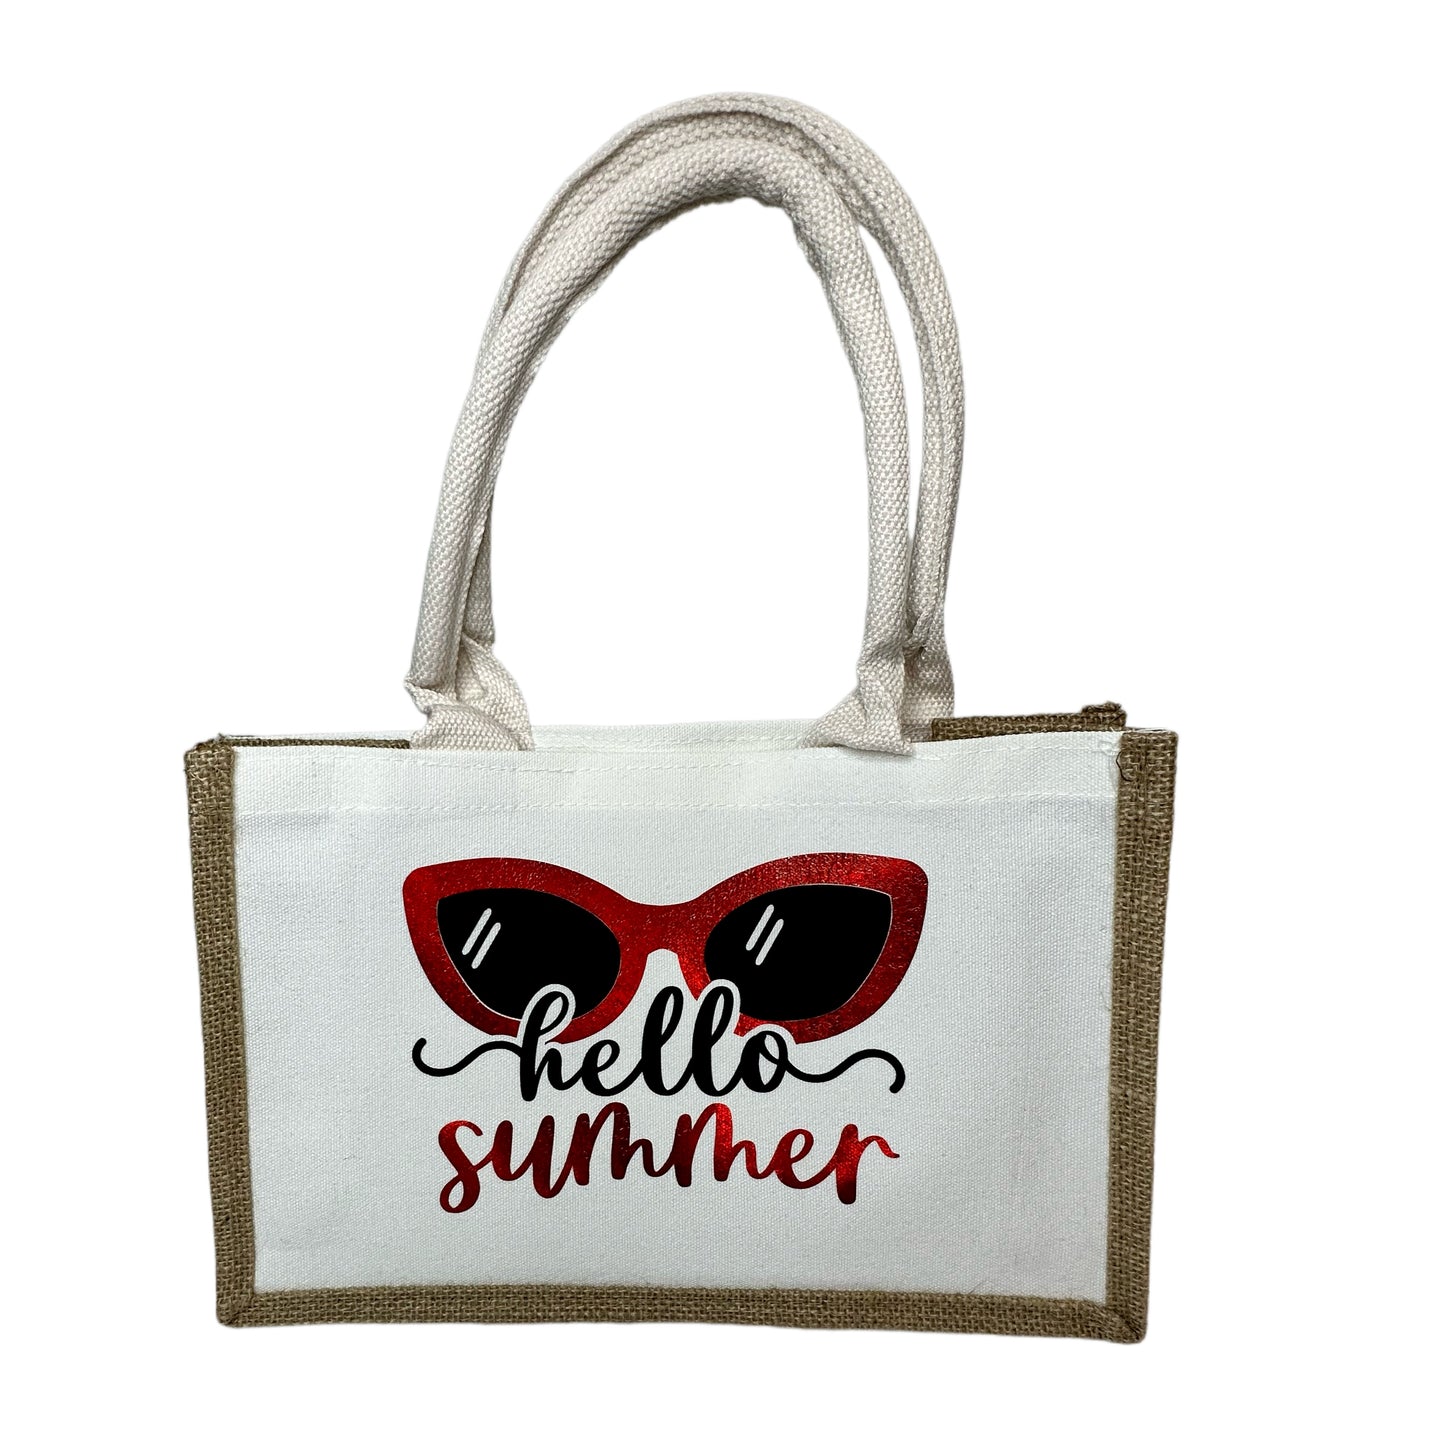 Hello summer burlap tote bag